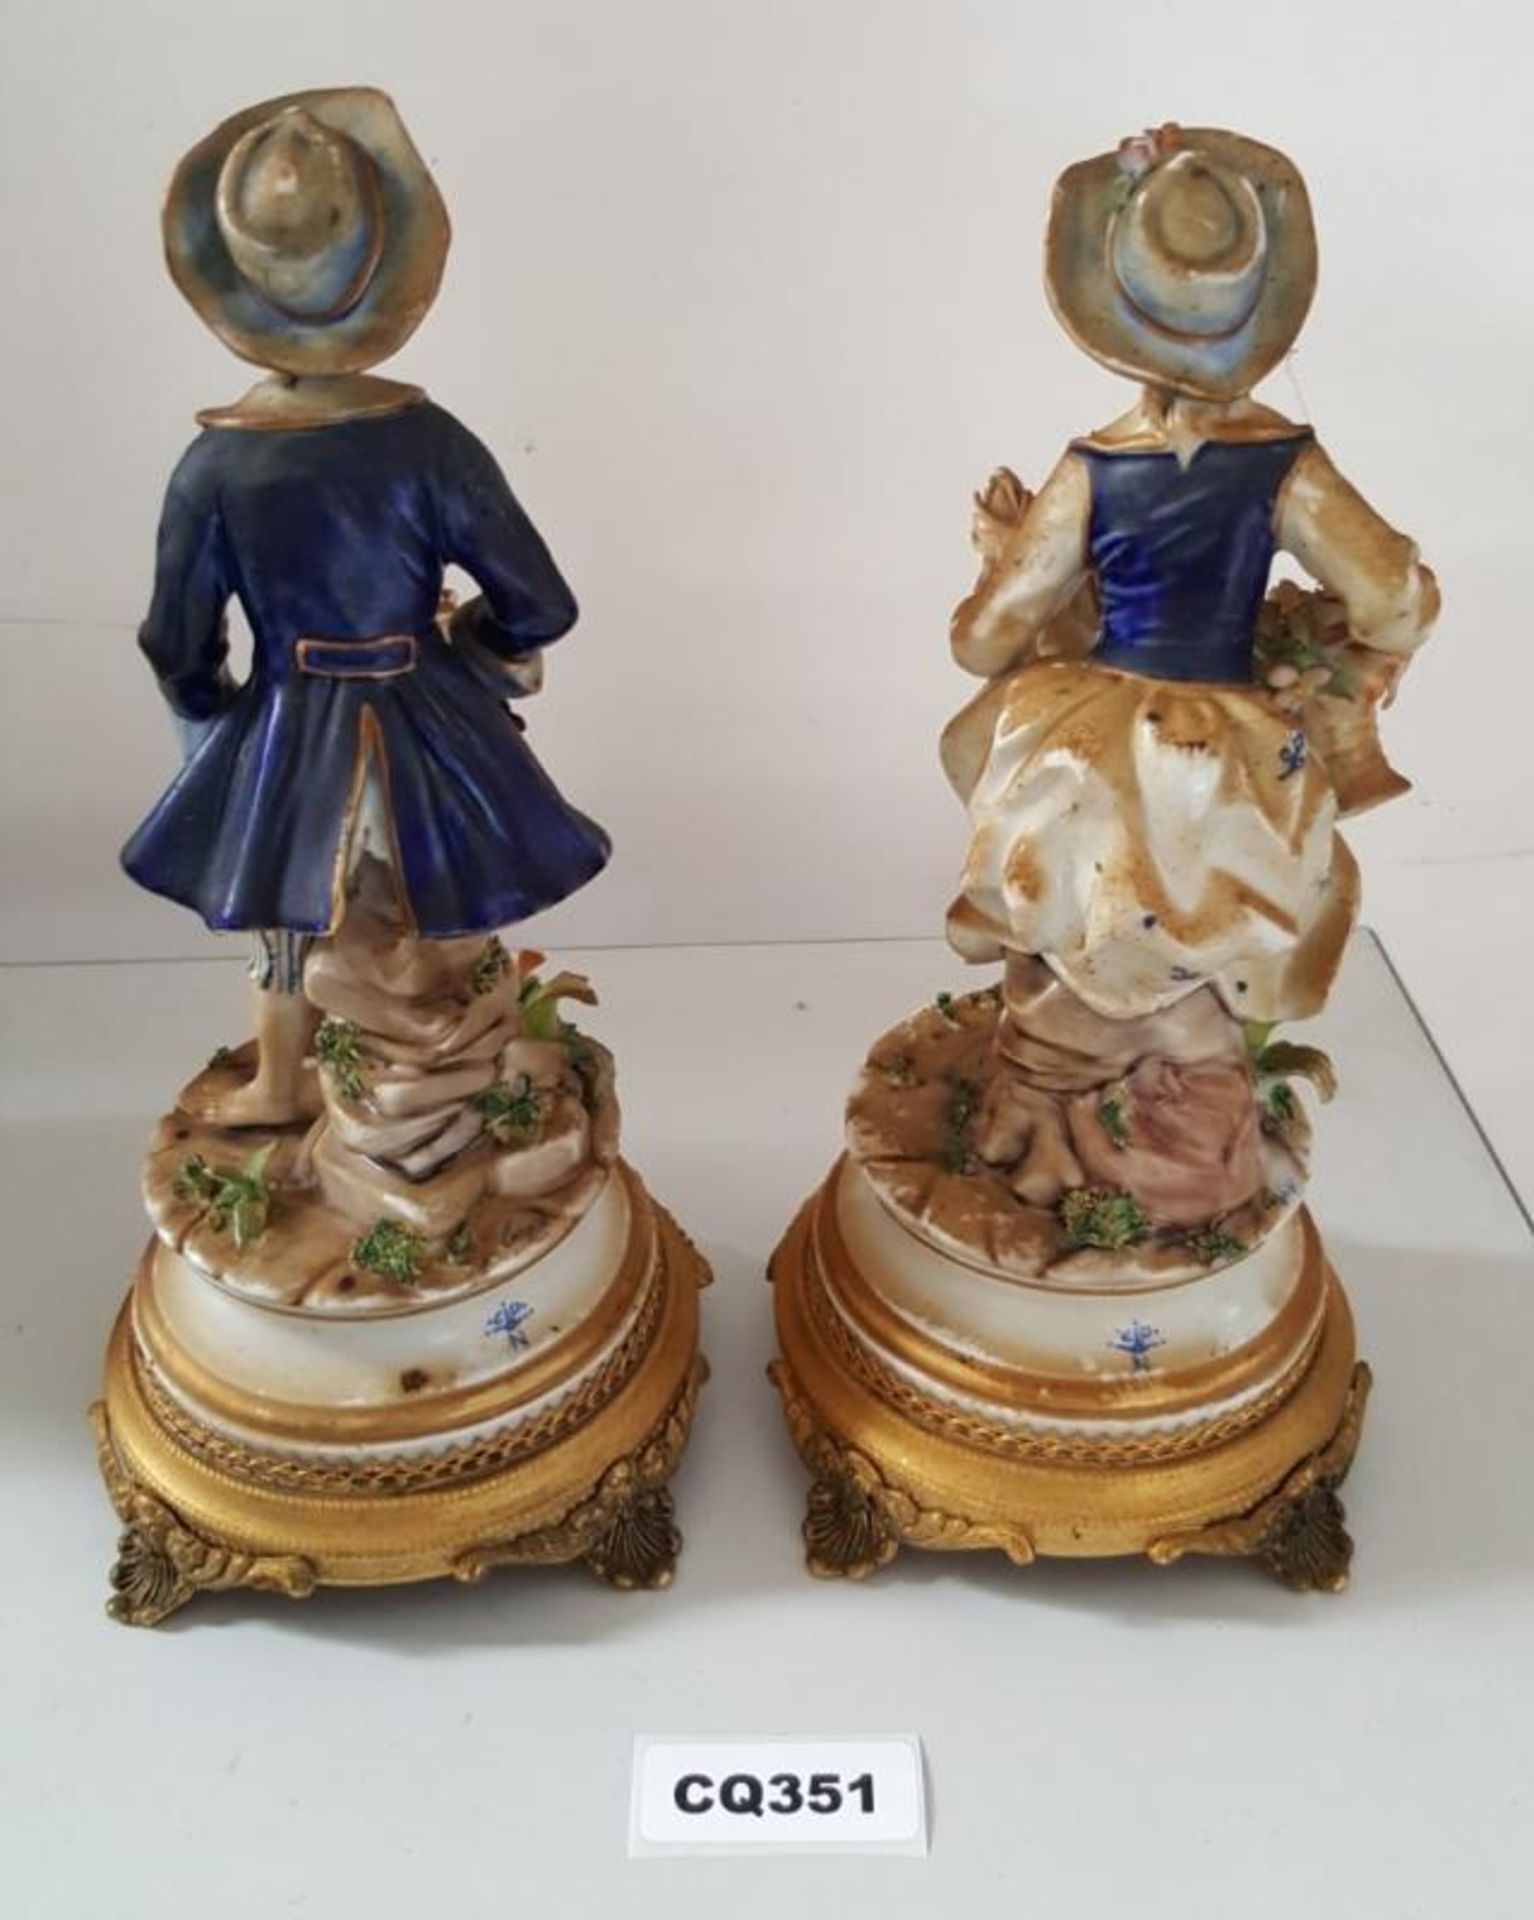 1 x A Pair Of Capodimonte Porcelain Figurines Of A Man & Women - Ref CQ351 E - Dimensions:H27/L11cm - Image 2 of 3